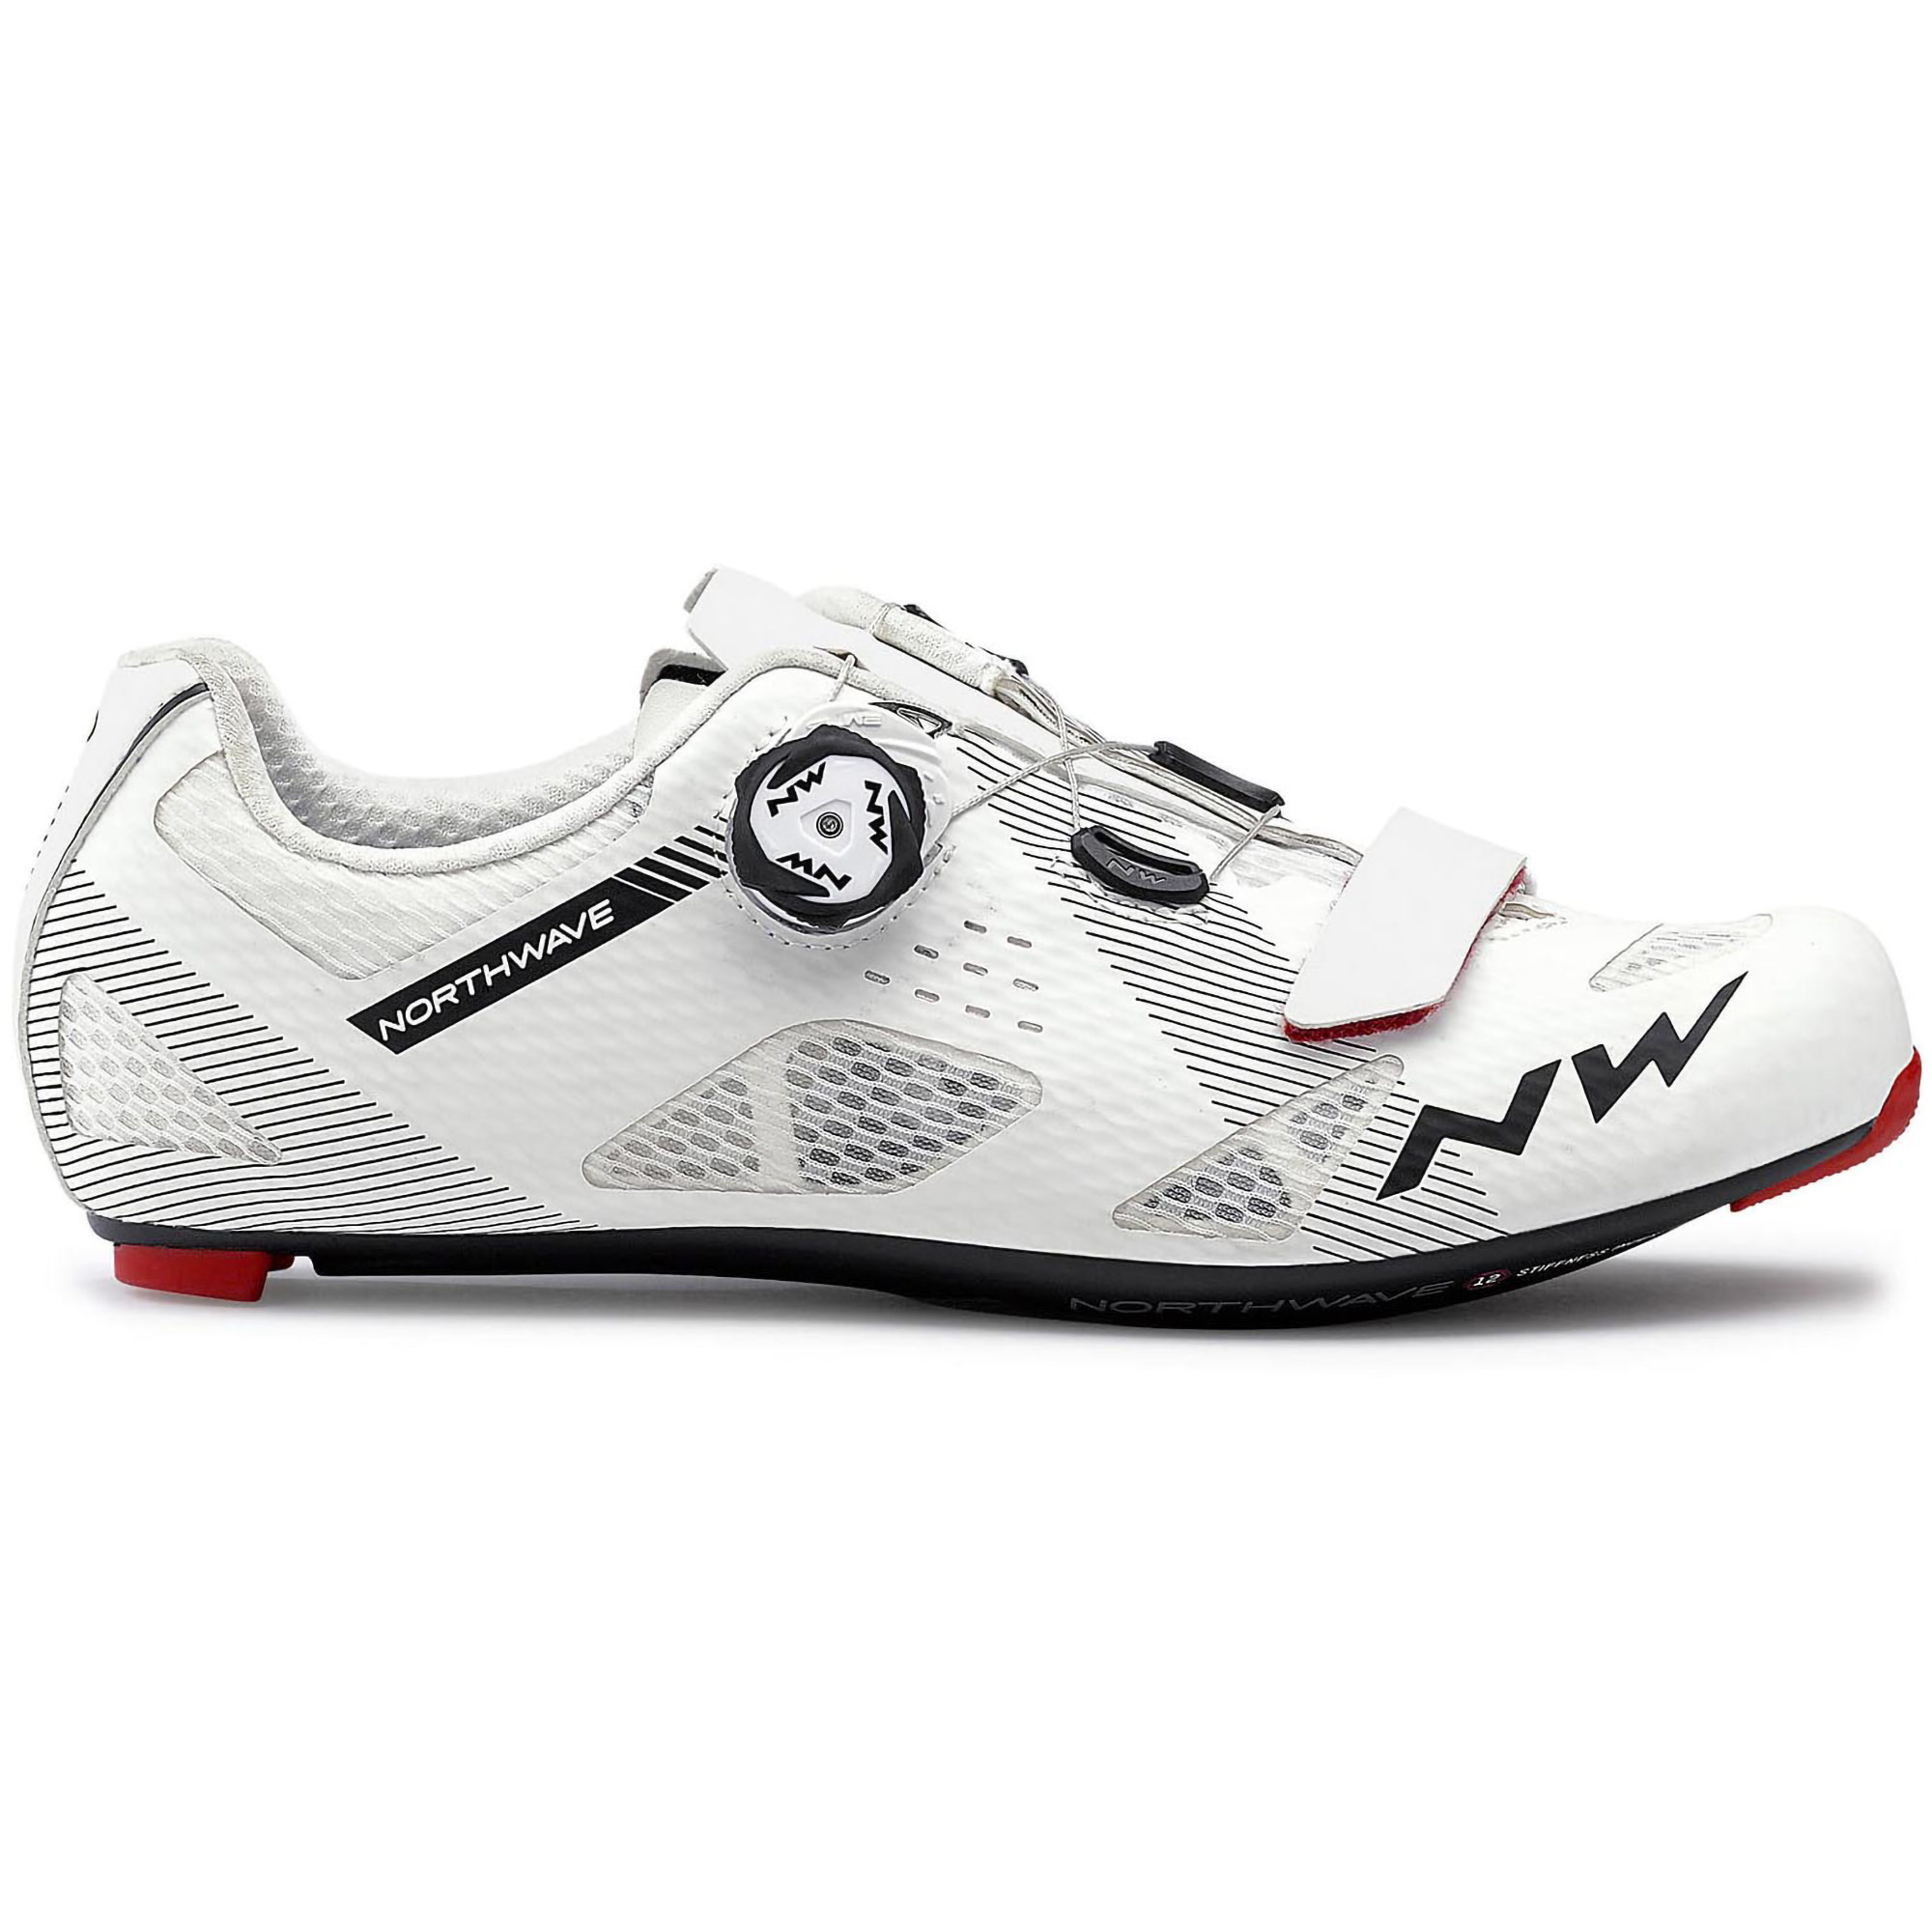 Northwave Storm Carbon Road Cycling Bike Shoes Footwear eBay